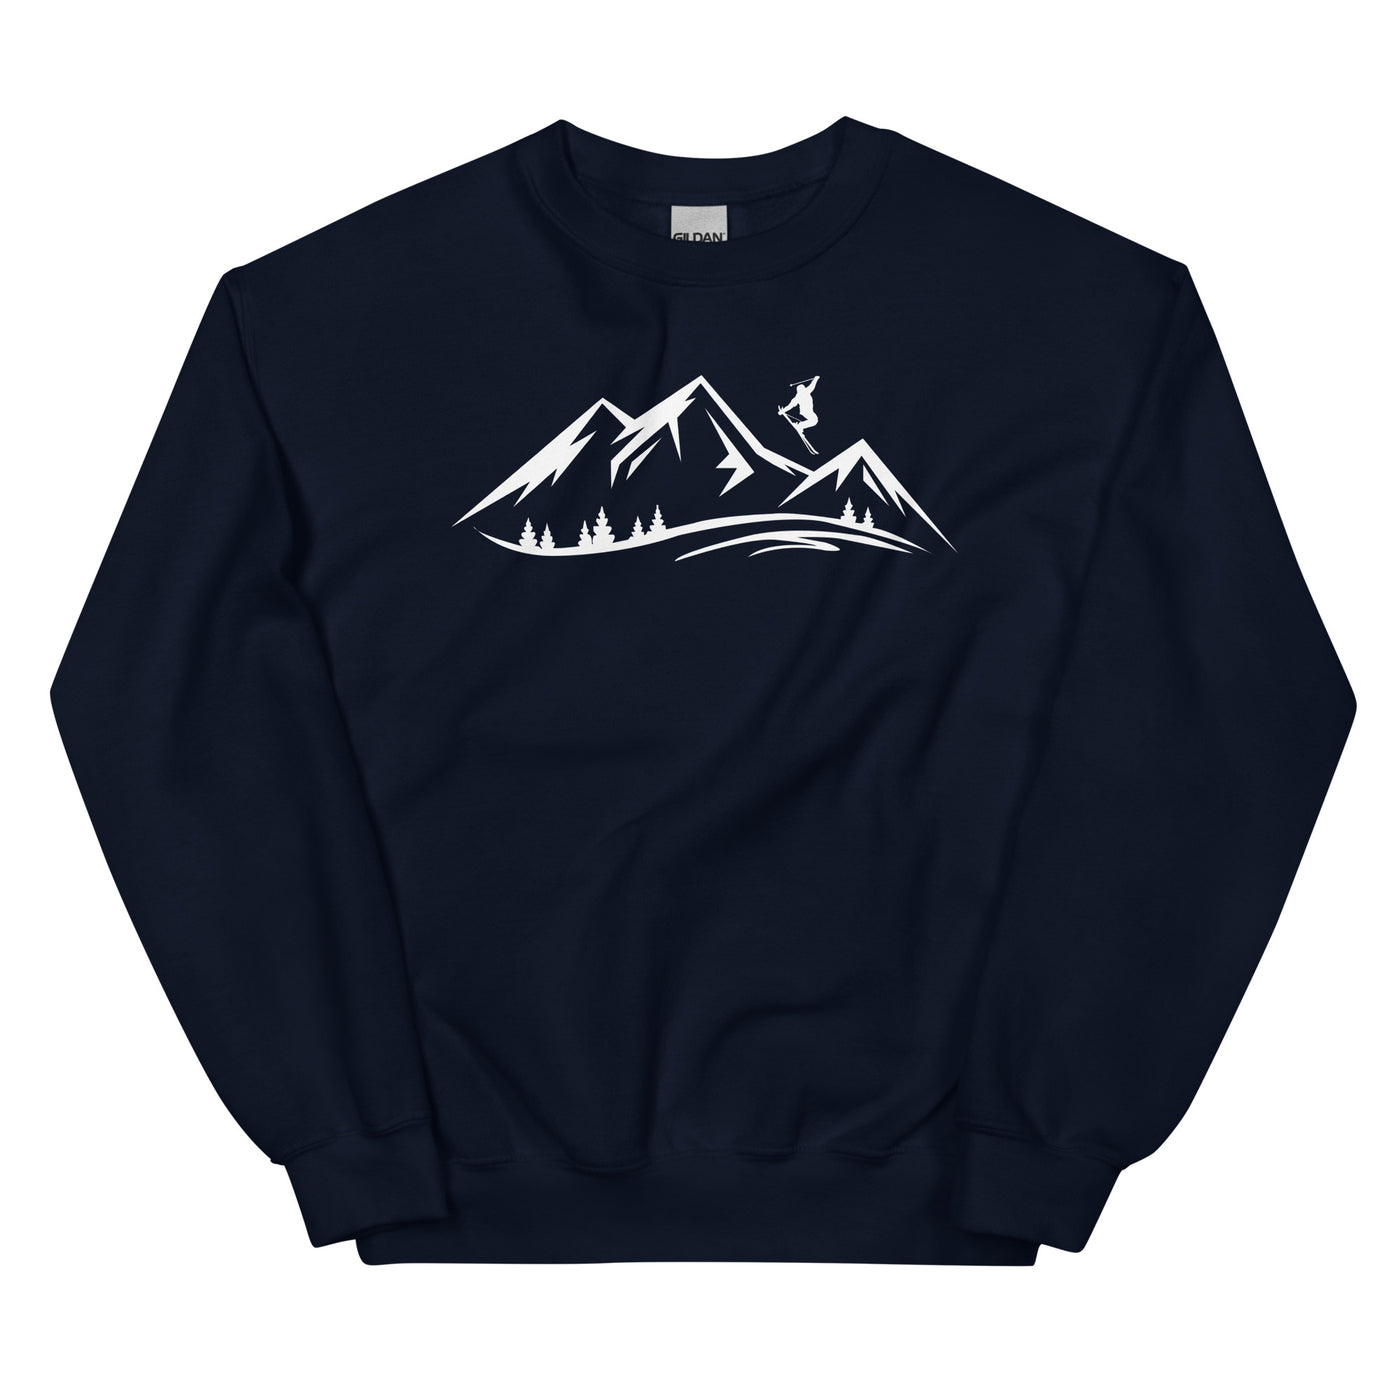 Berge und Skifahren - Sweatshirt (Unisex) klettern ski xxx yyy zzz Navy